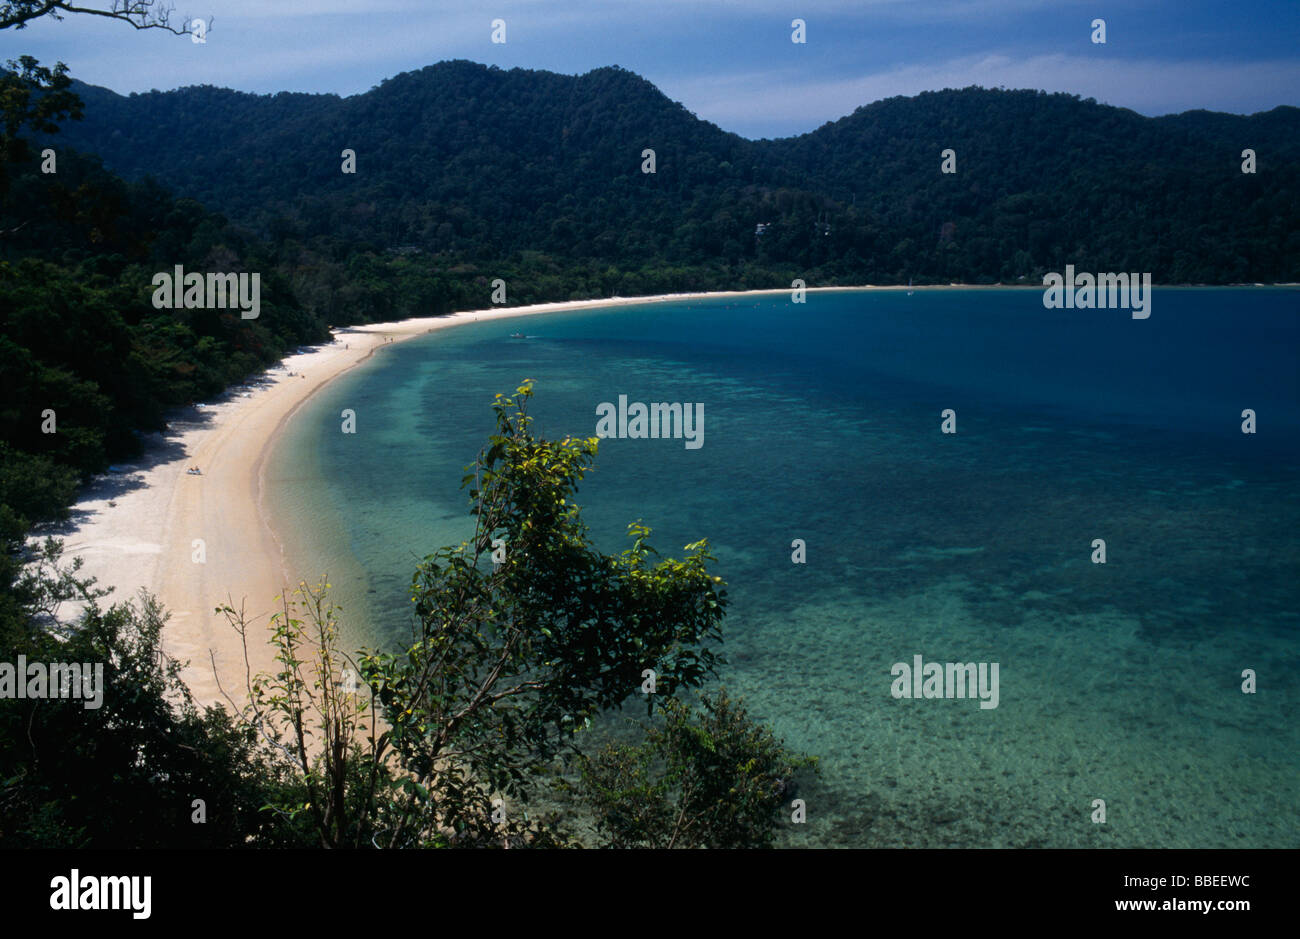 Malaysia Kedah Langkawi Datai Bay Beach Curve Of White Sandy Beach In